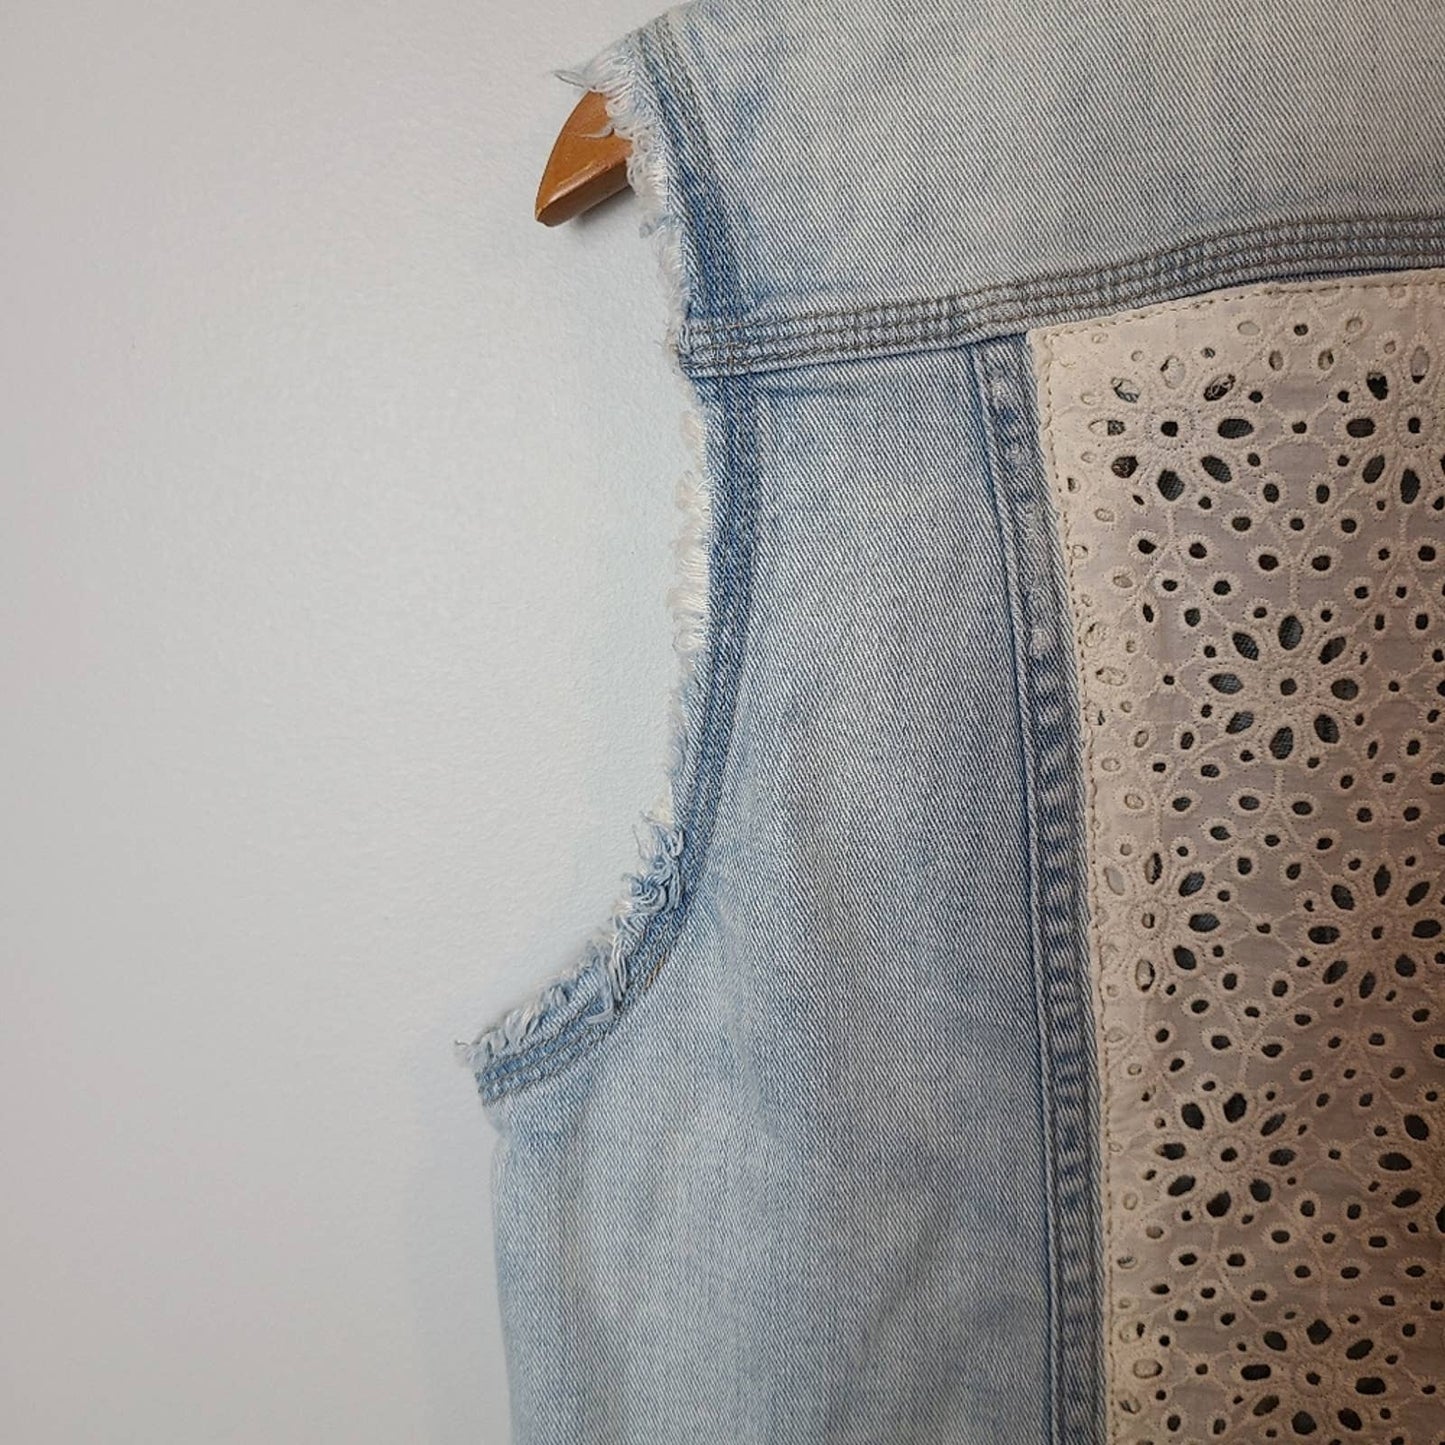 Lucky Brand Cutoff Stone Wash Lace & Denim Jean Vest - L